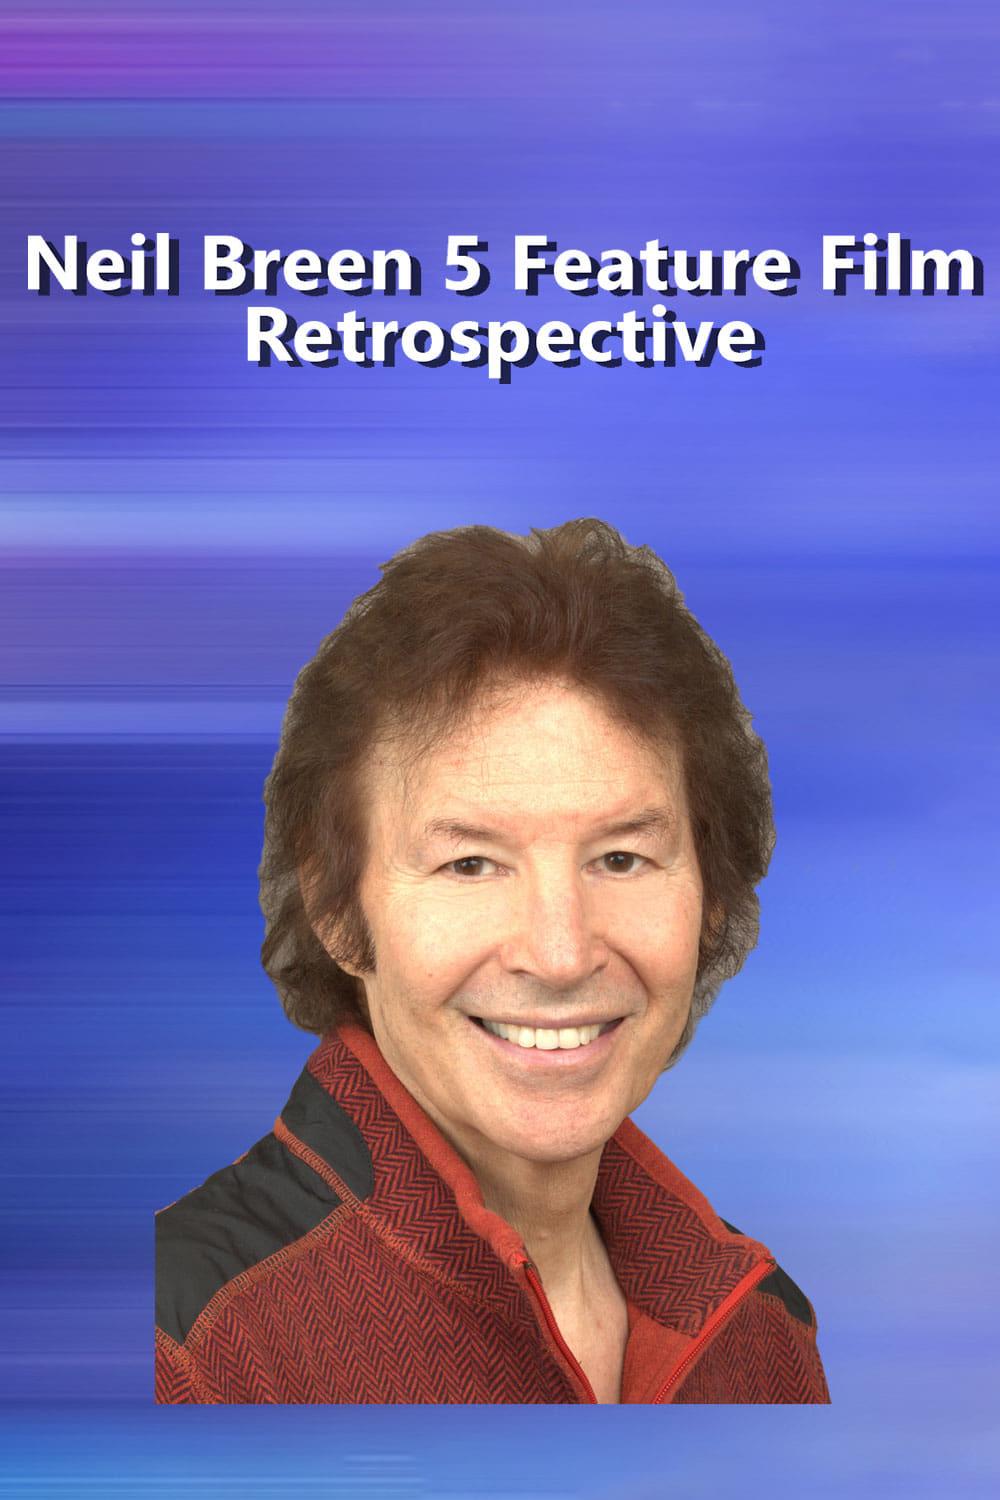 Neil Breen 5 Feature Film Retrospective poster